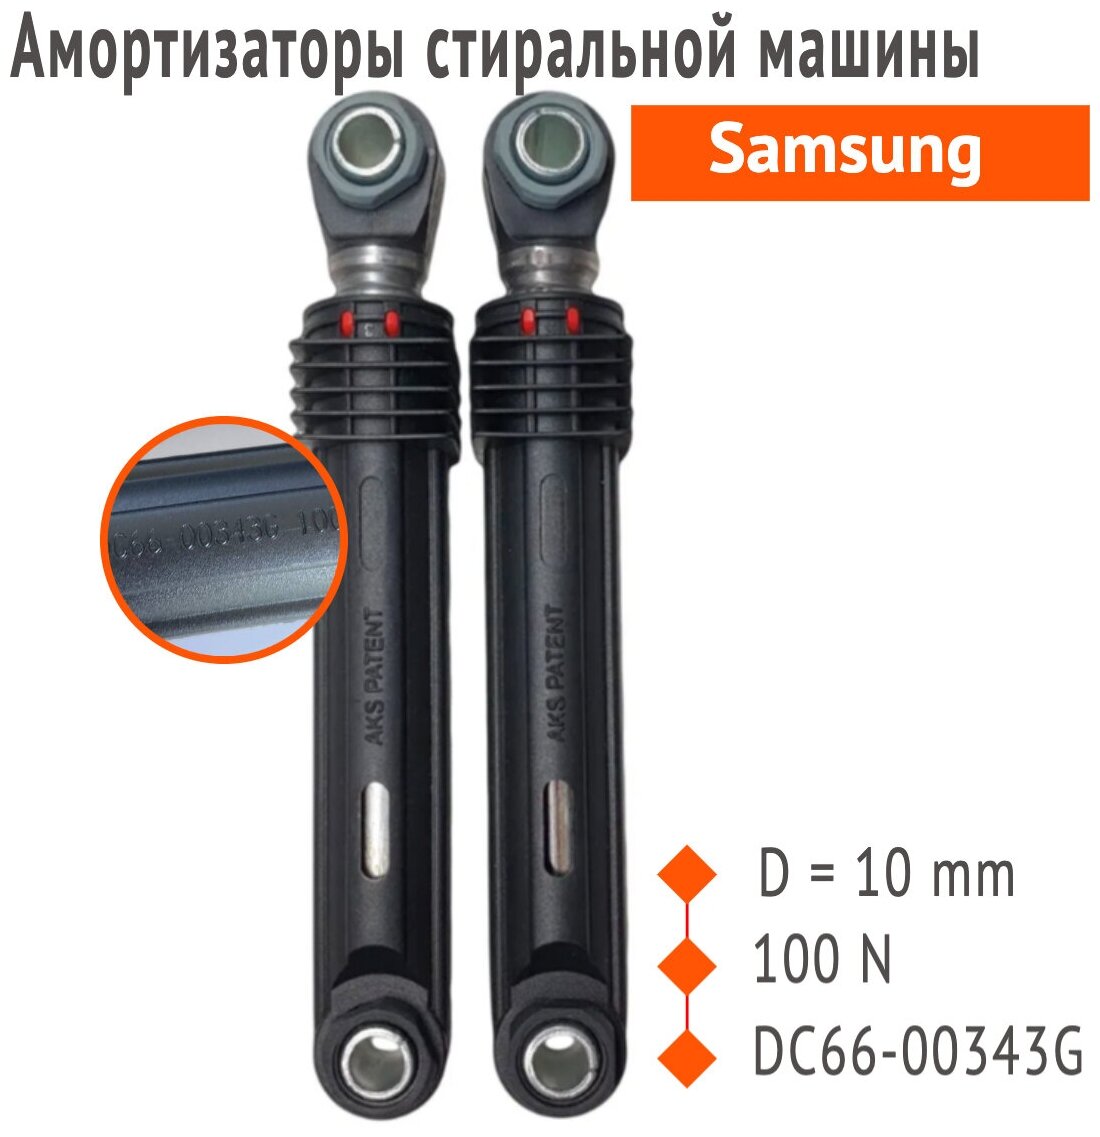 Амортизаторы для стиральной машины Samsung D-10 мм, 100N, DC66-00343G, 2 шт